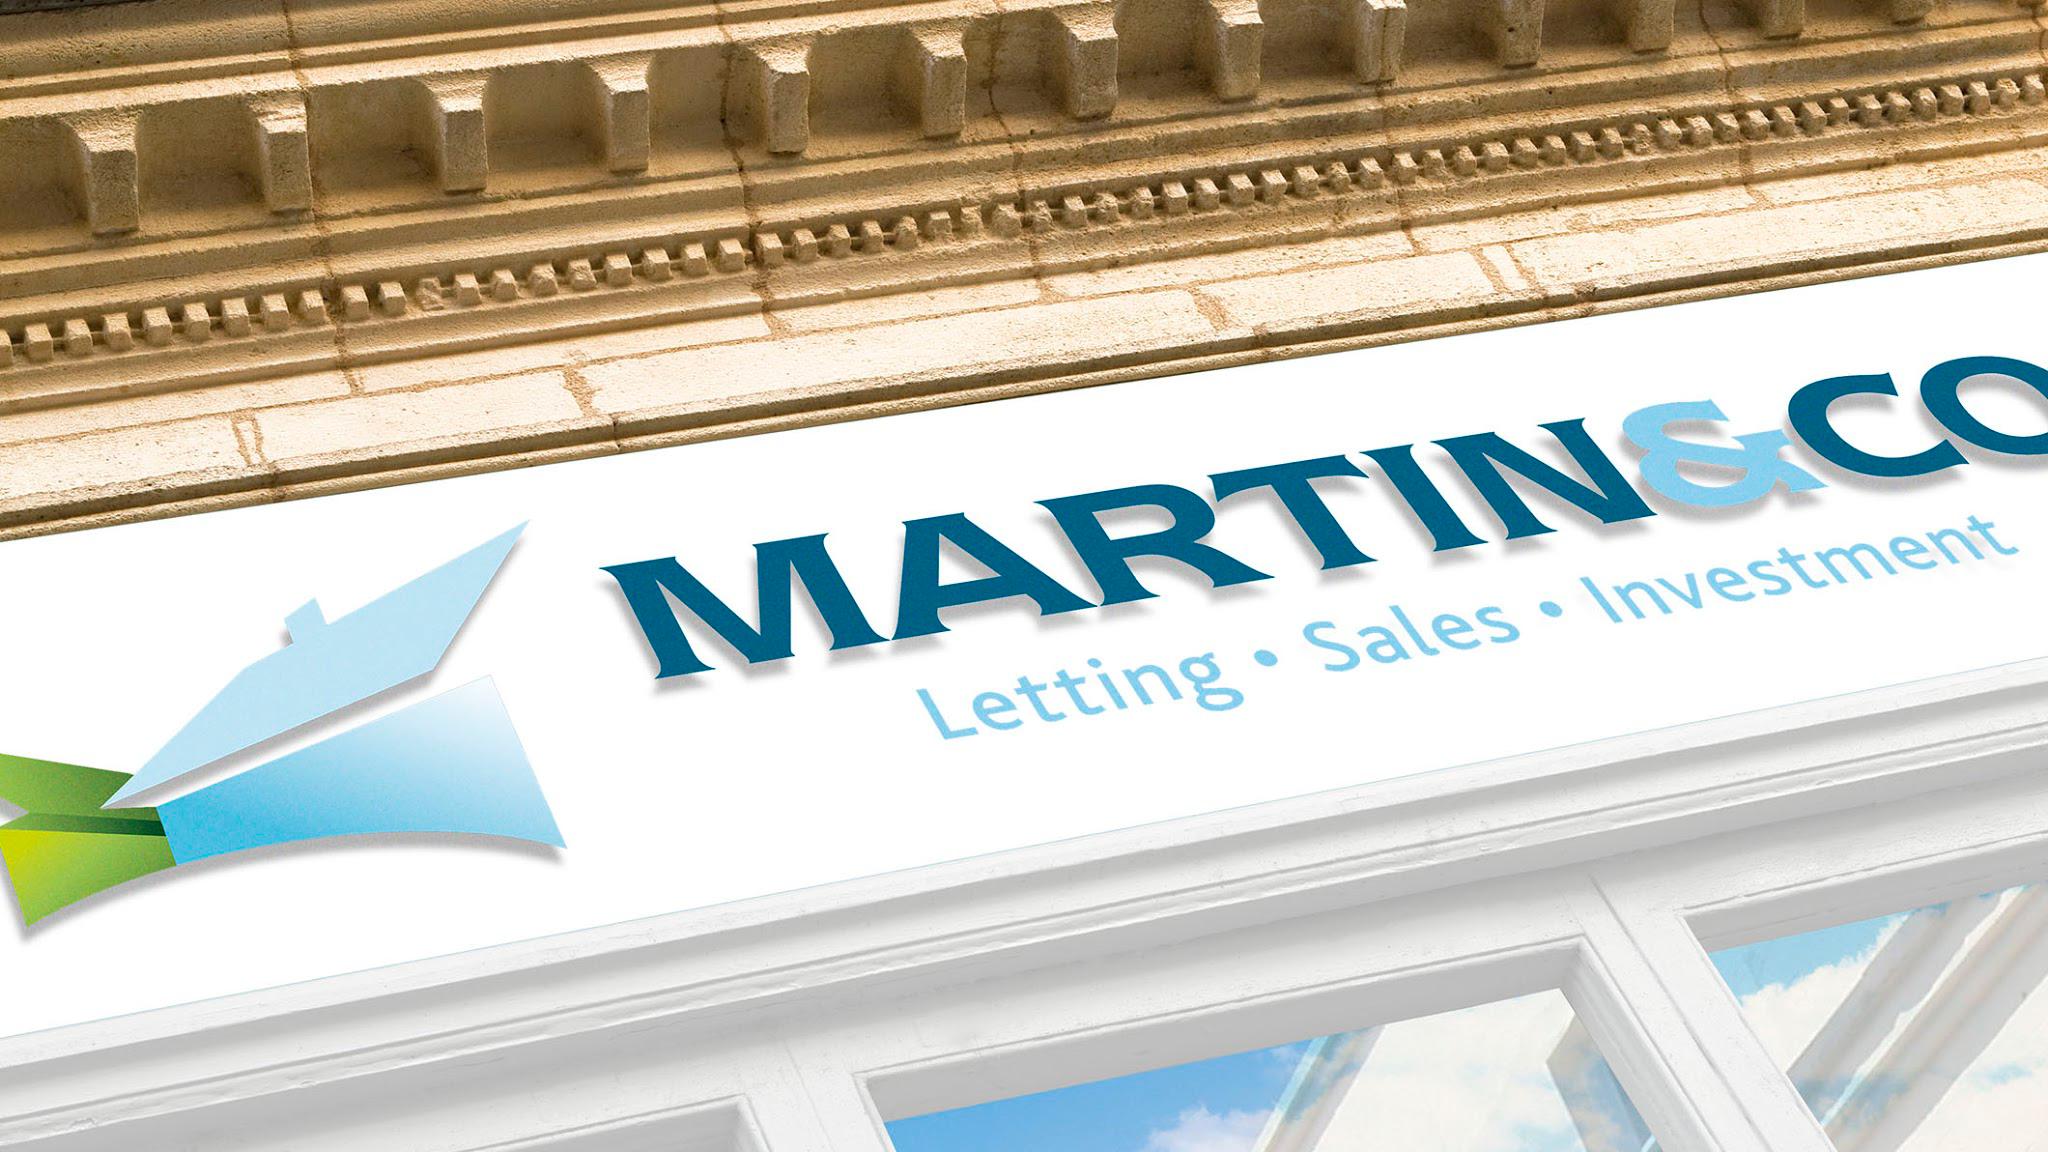 Martin & Co Horsham Lettings & Estate Agents West Sussex 01403 248222